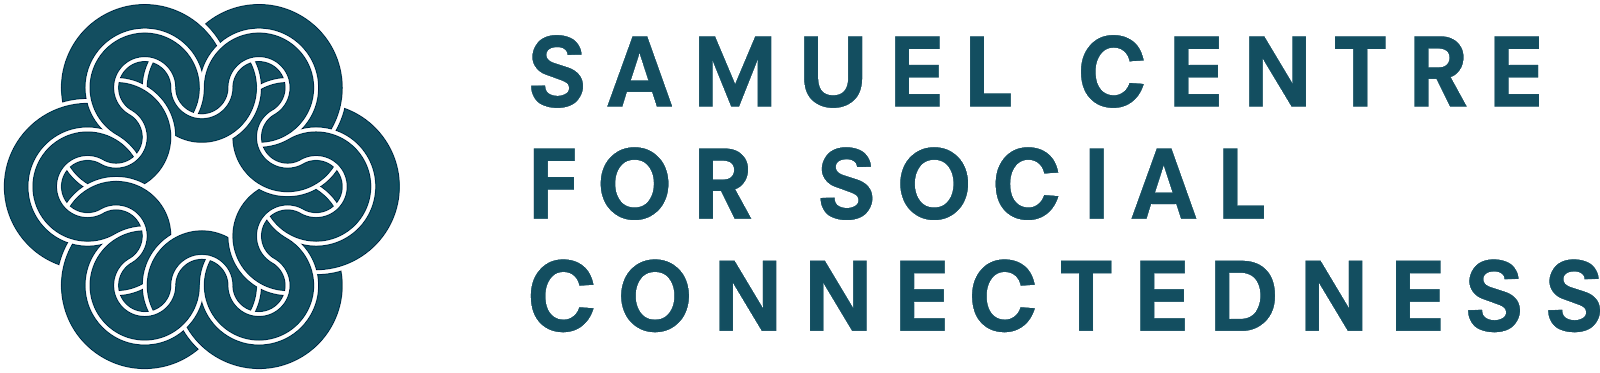 The Samuel Centre for Social Connectedness logo - a teal flower